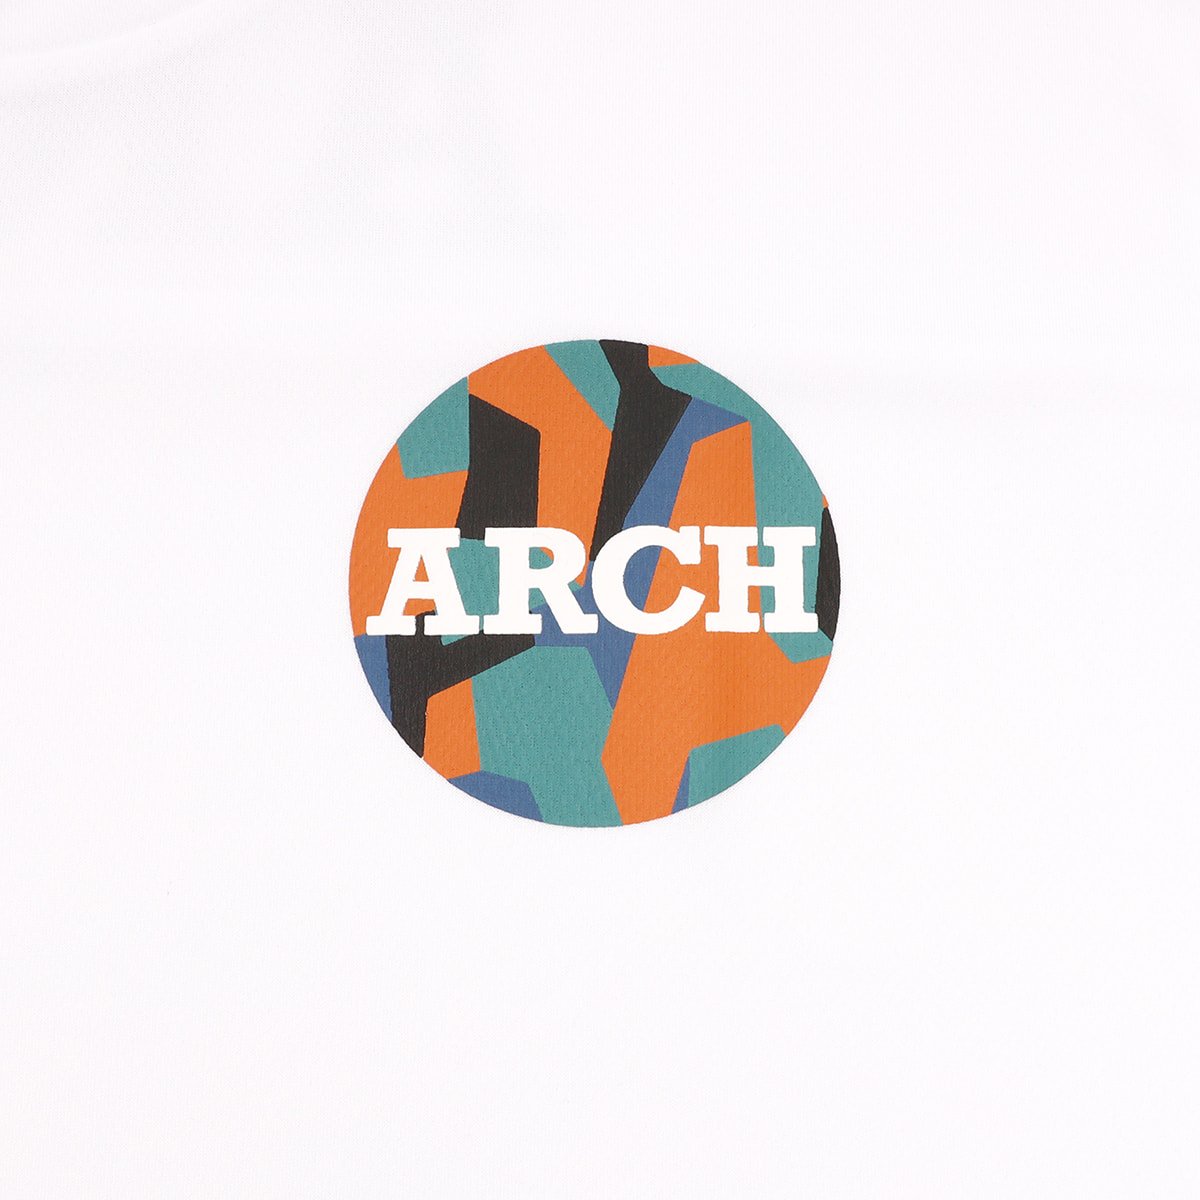 polygonal tee [DRY]【white】 - Arch ☆ アーチ [バスケットボール＆ライフスタイルウェア  BasketballLifestyle wear]